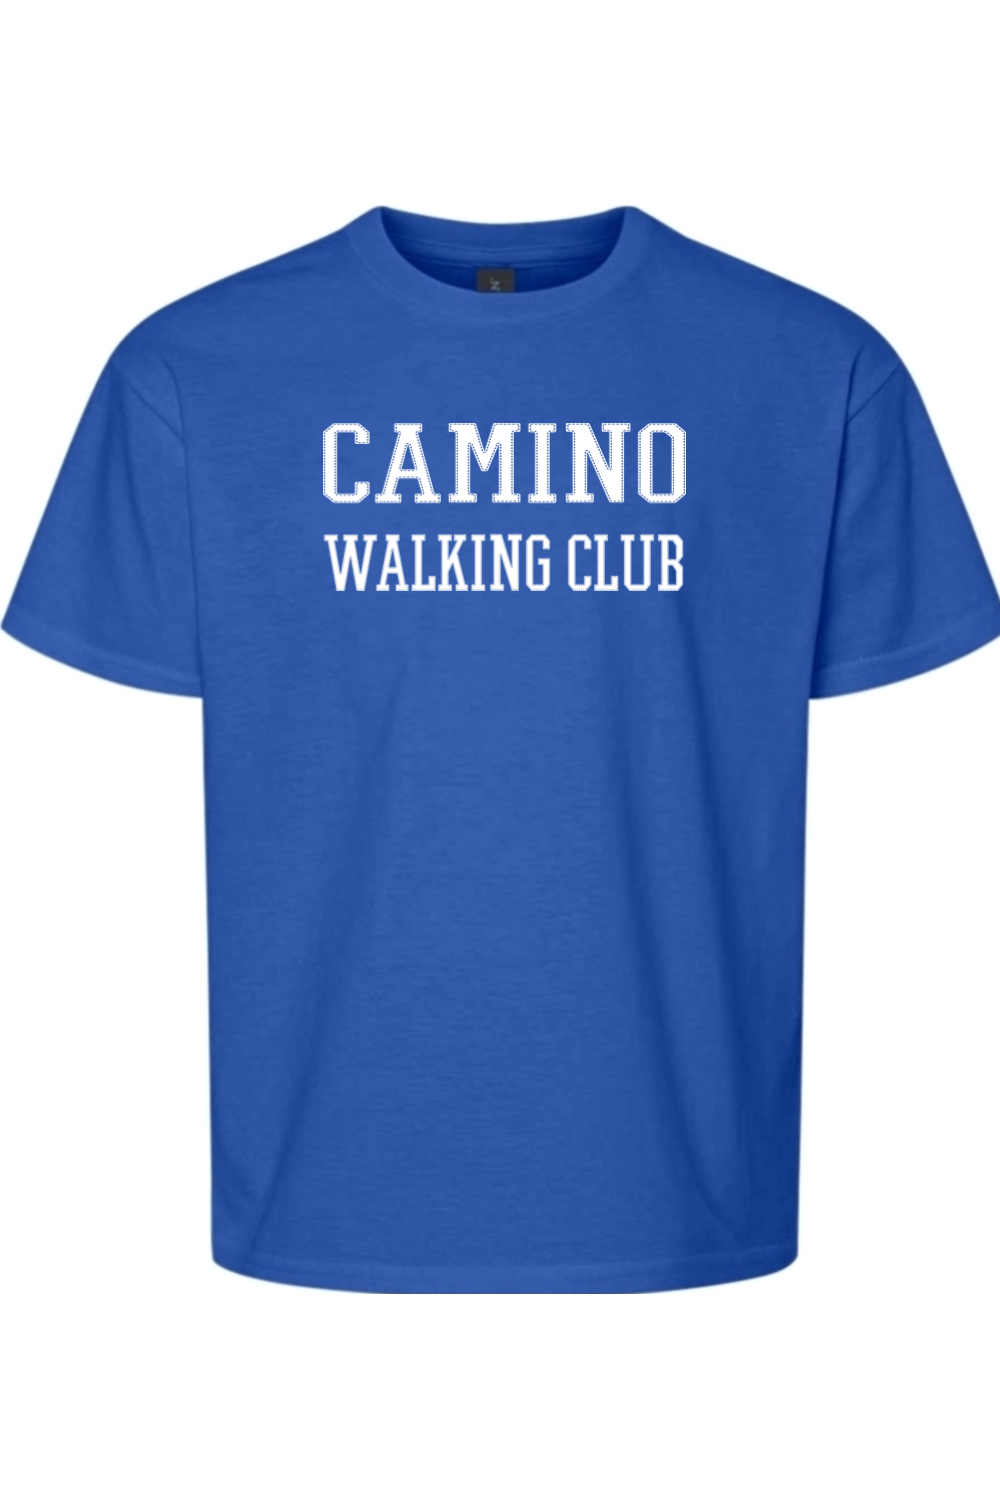 Camino Walking Club Youth T-Shirt